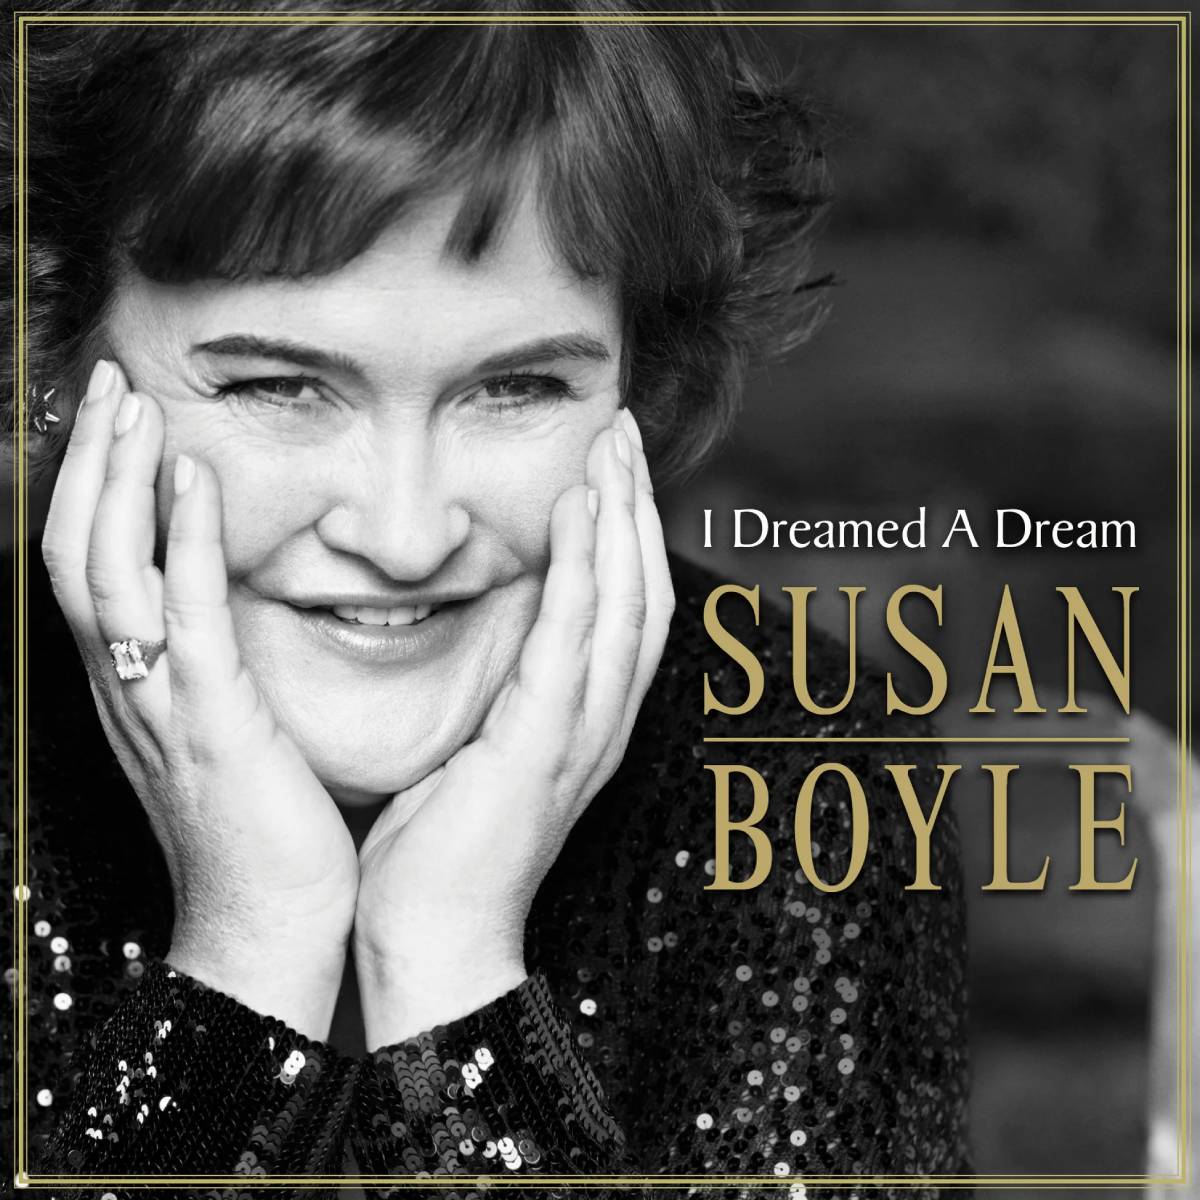 I Dreamed A Dream (musical album by Susan Boyle)